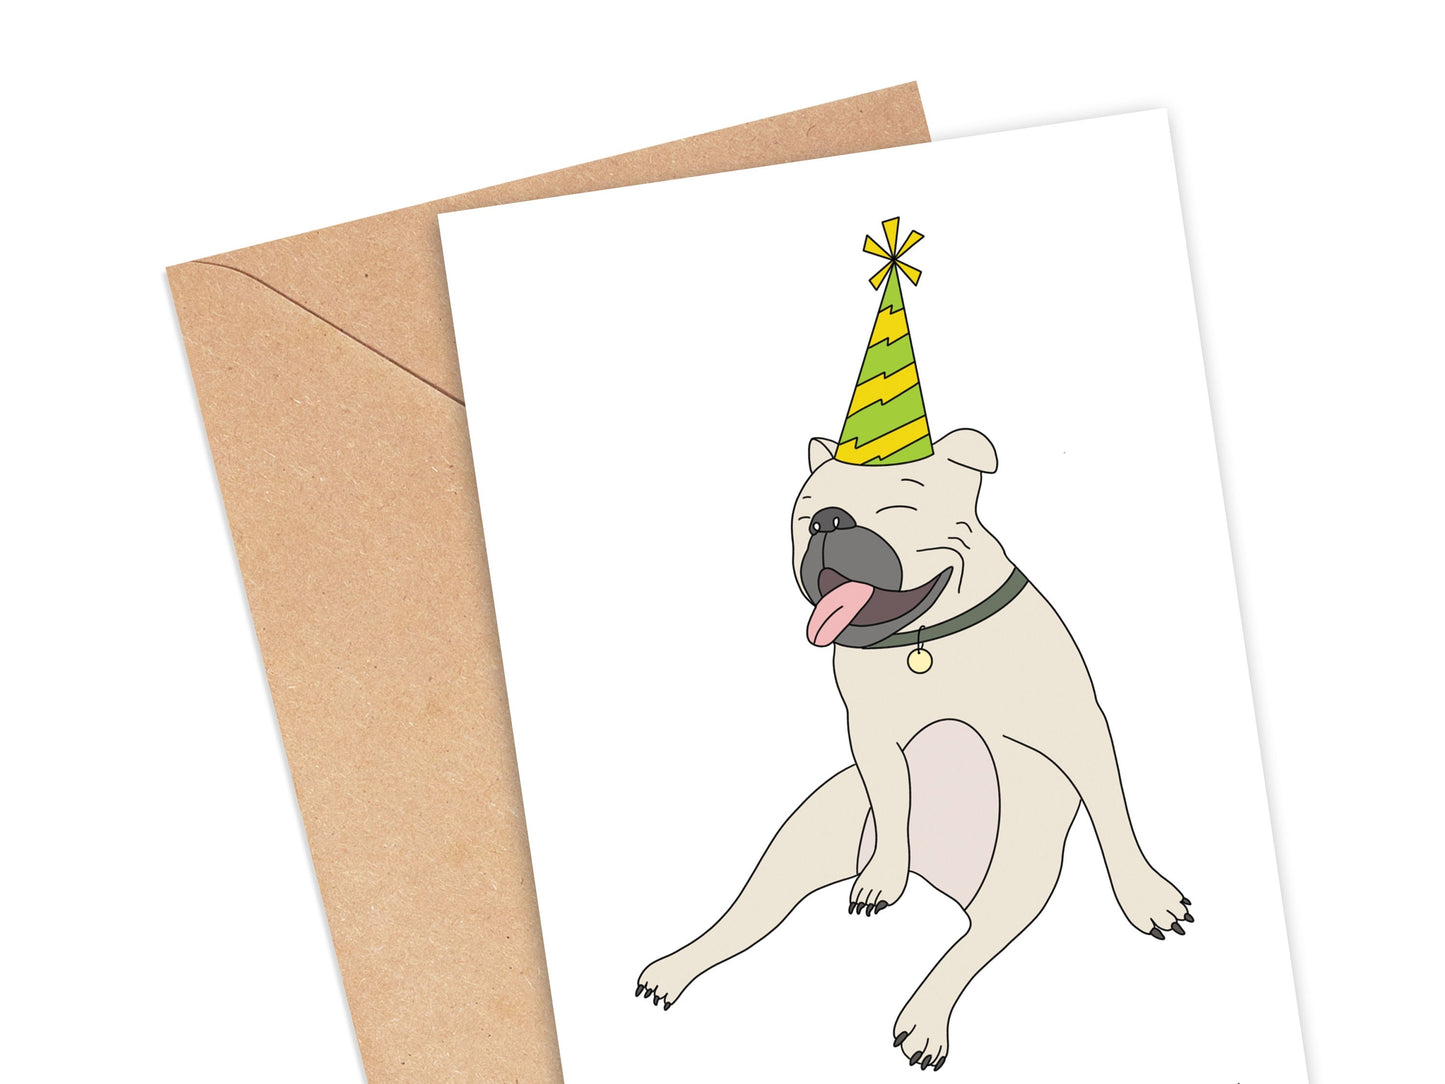 Happy Birthday French Bulldog Card Simply Happy Cards